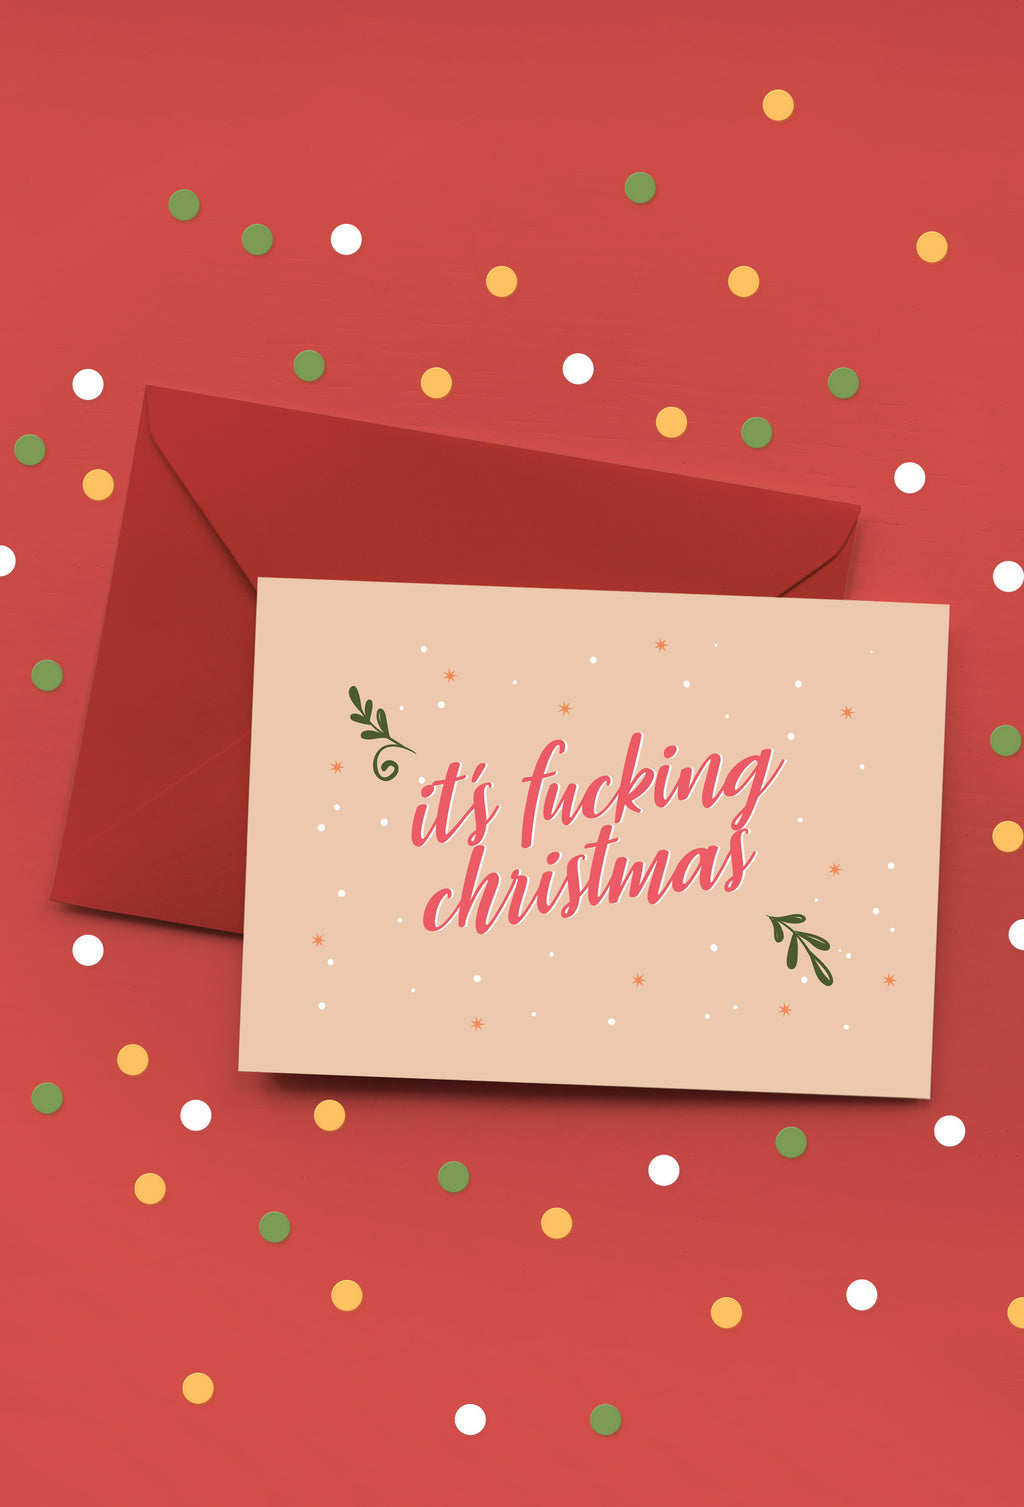 IT'S FUCKING CHRISTMAS - GREETINGS CARD